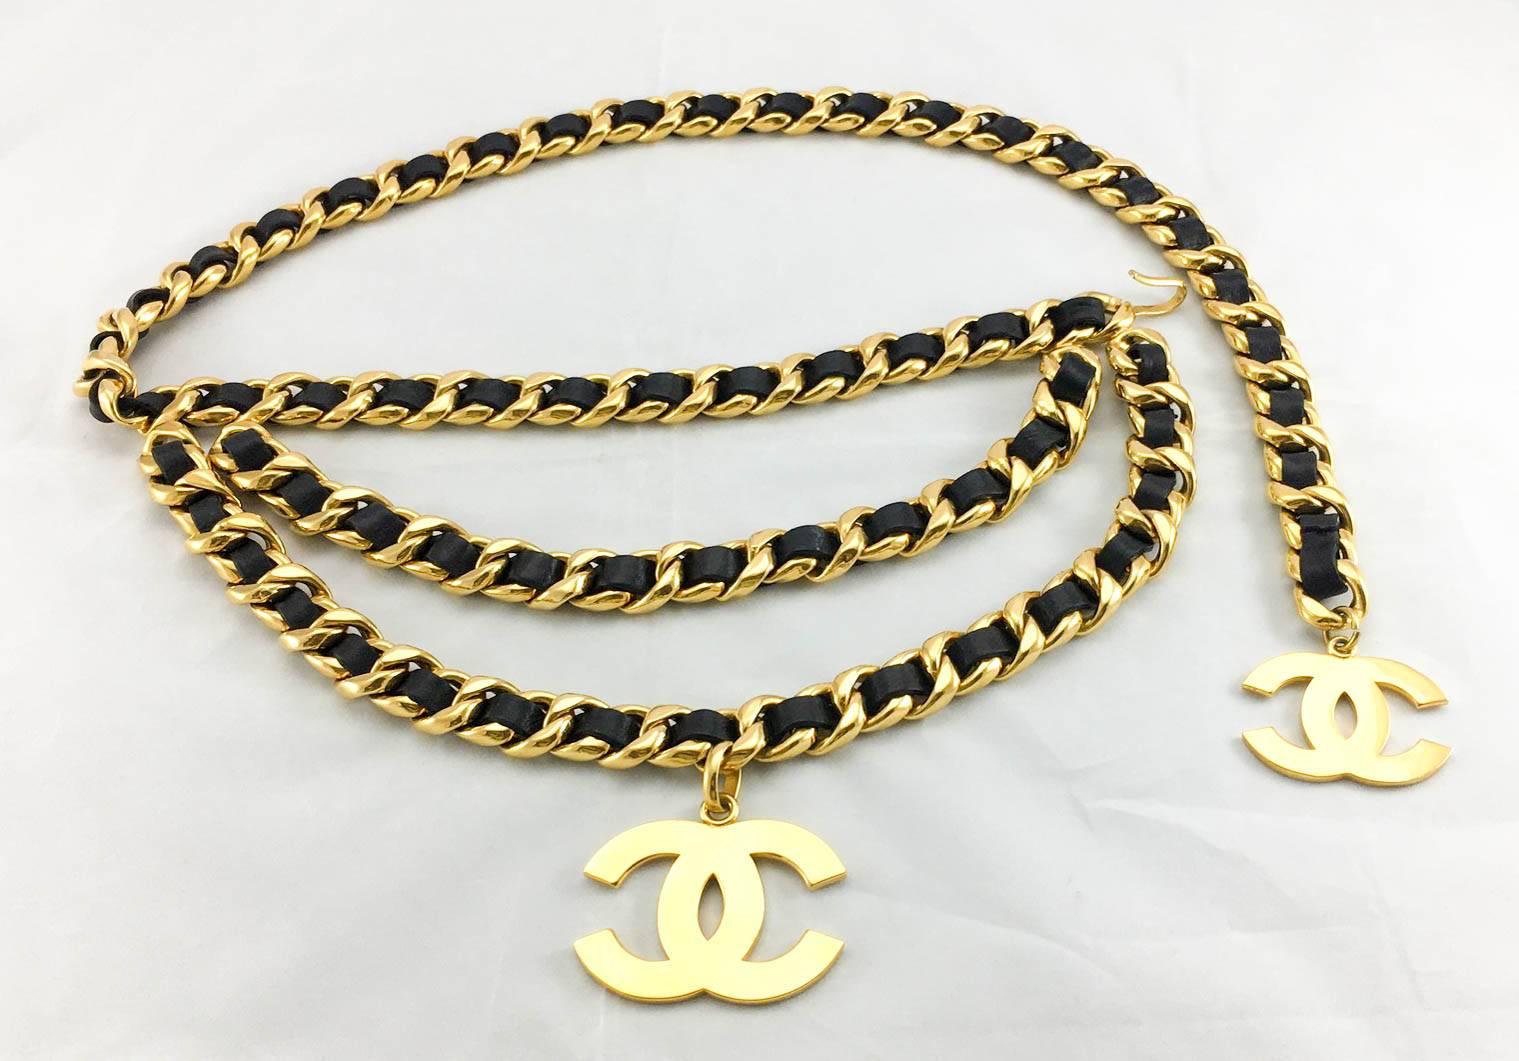 Beige Chanel Runway Black Leather and Gold-Tone Chain Logo Belt - Circa 1992